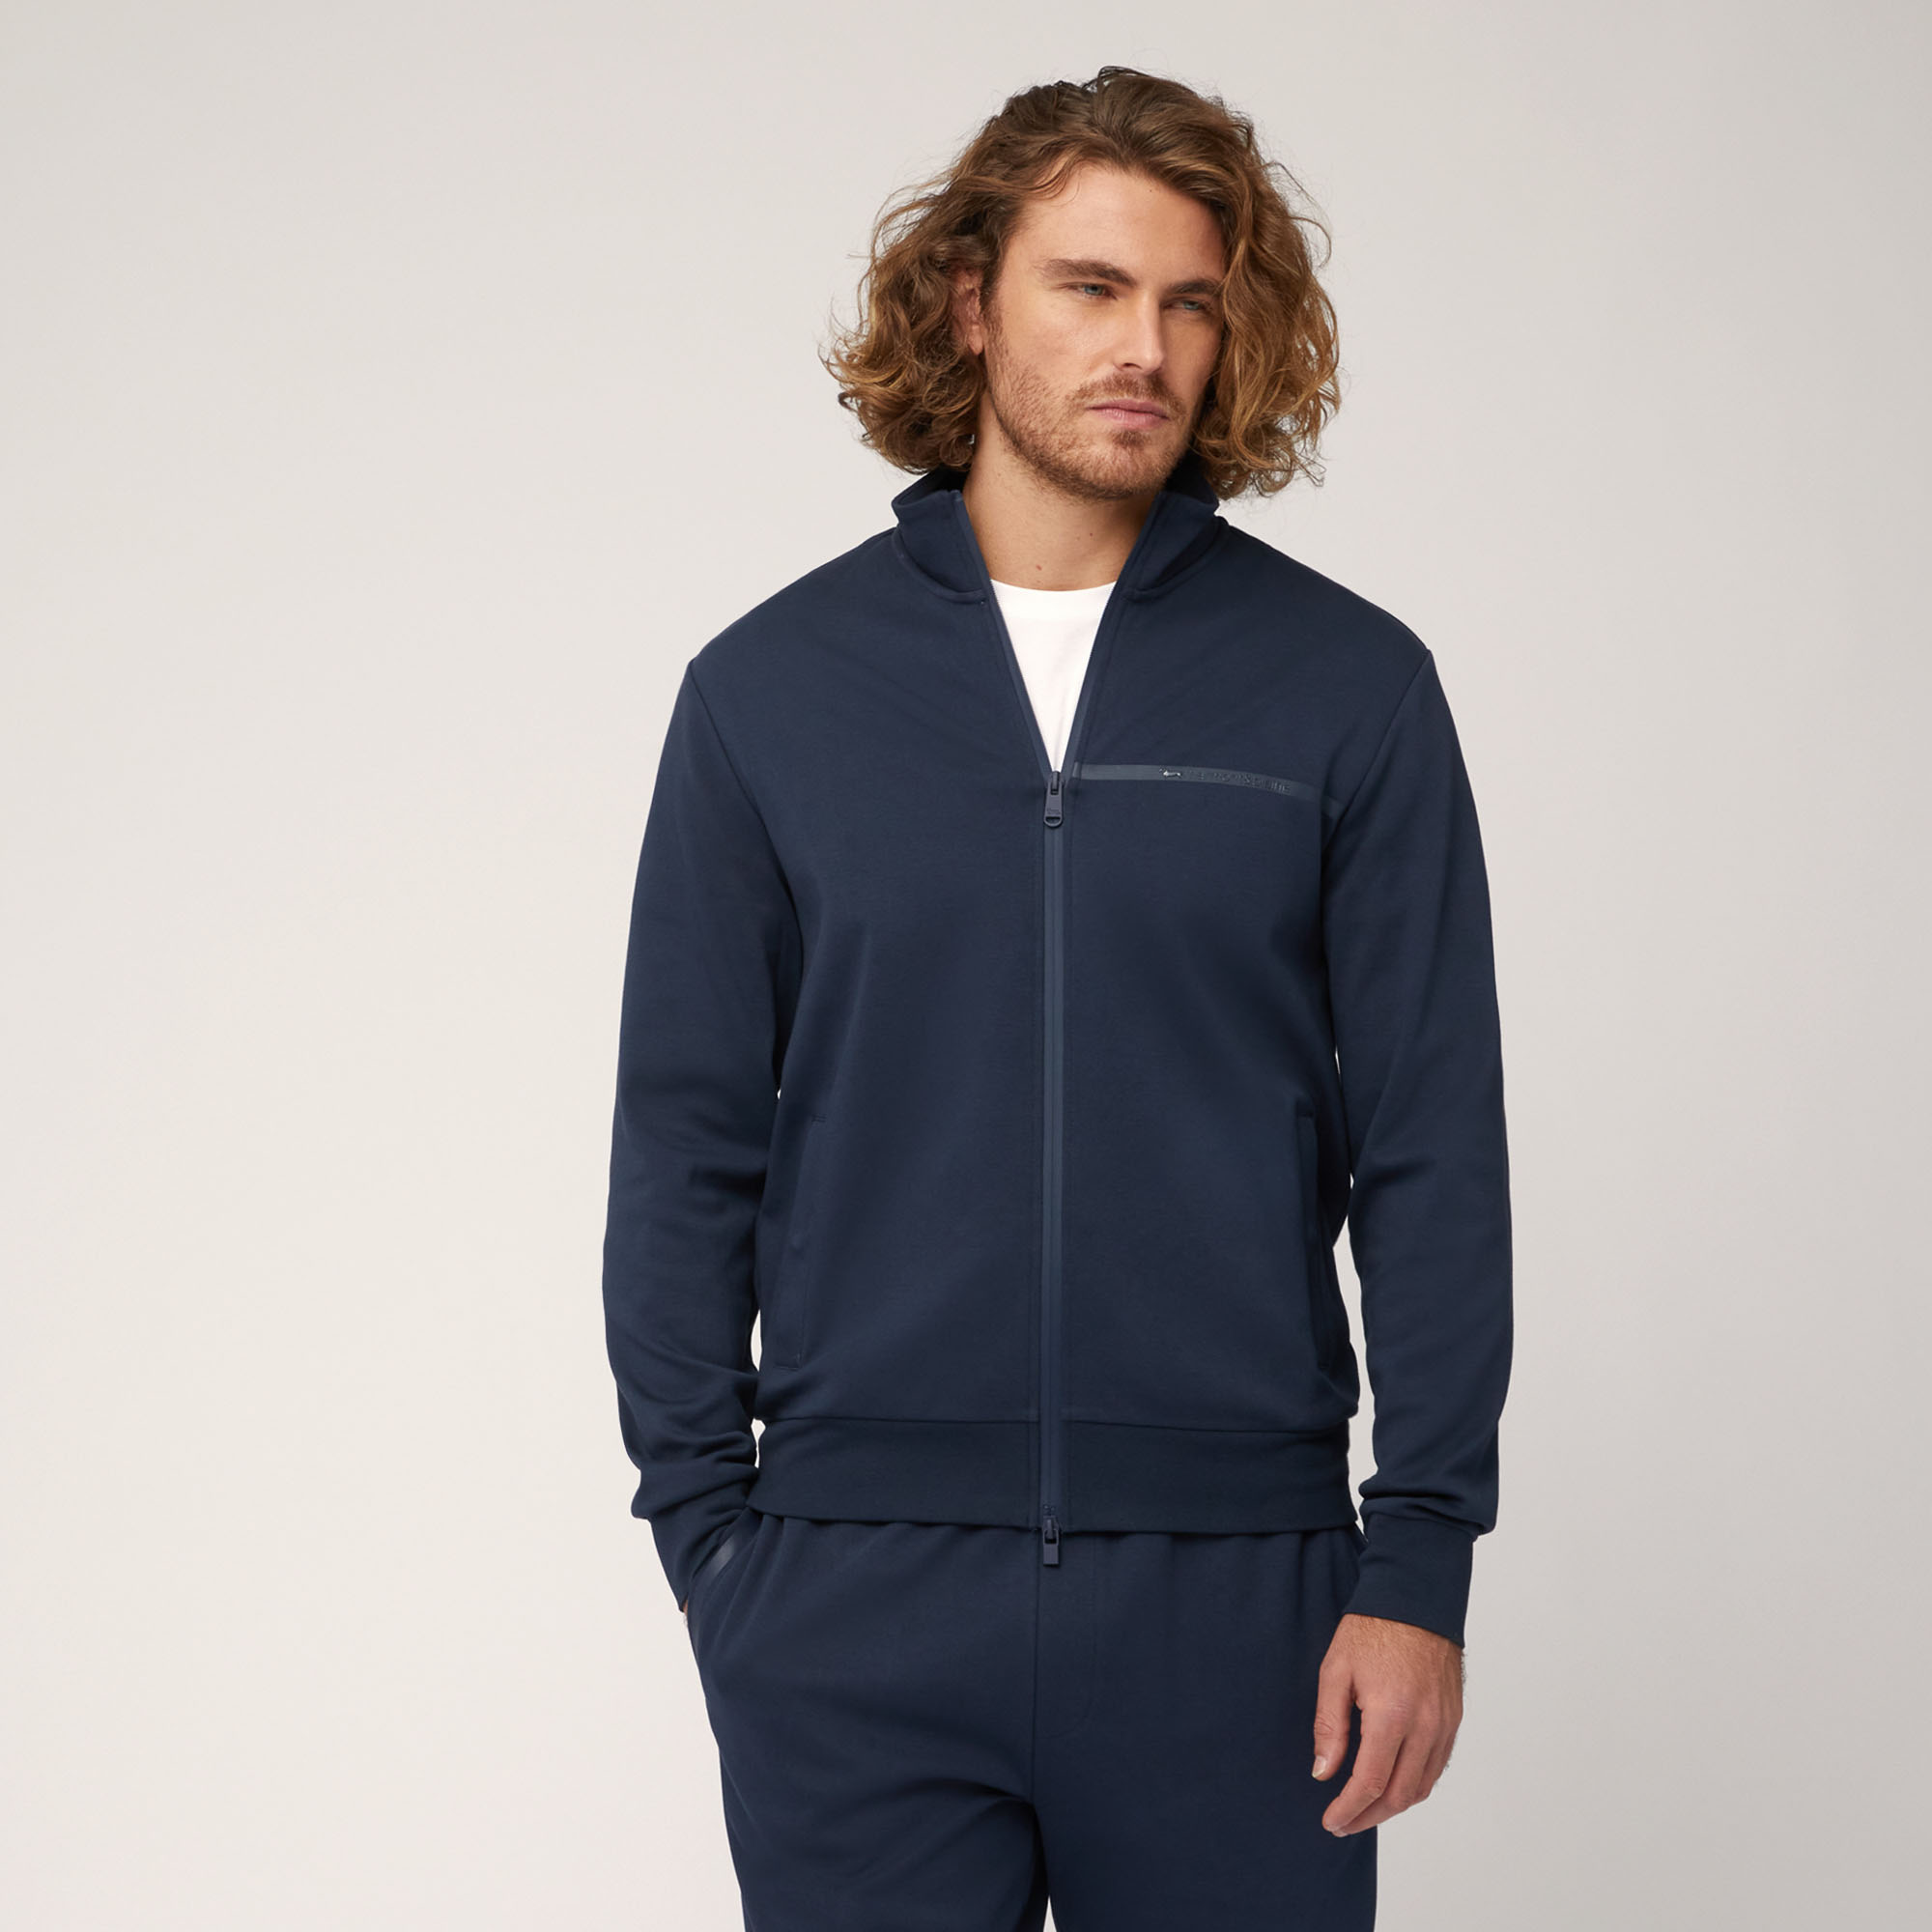 Cotton Full-Zip Sweatshirt with Heat-Sealed Details